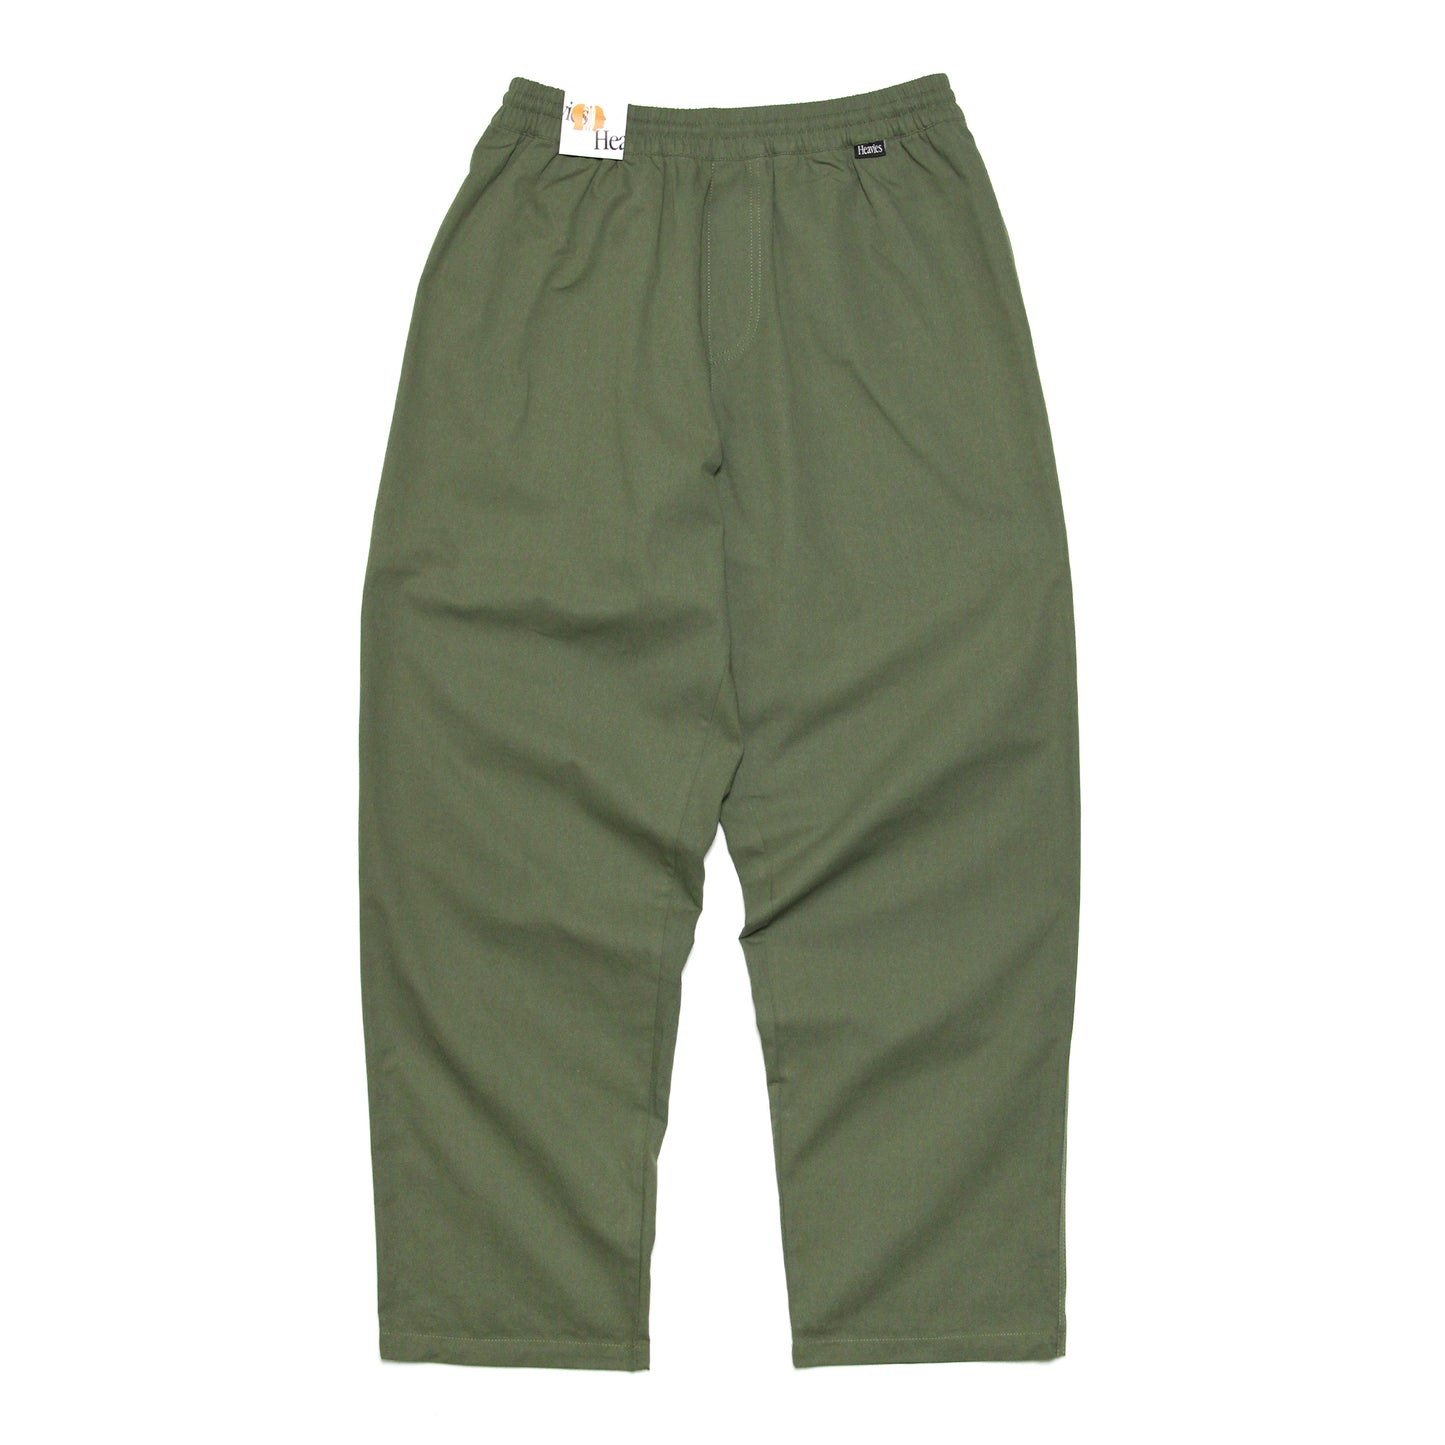 HEAVIES - Henzo Pants/Army Green